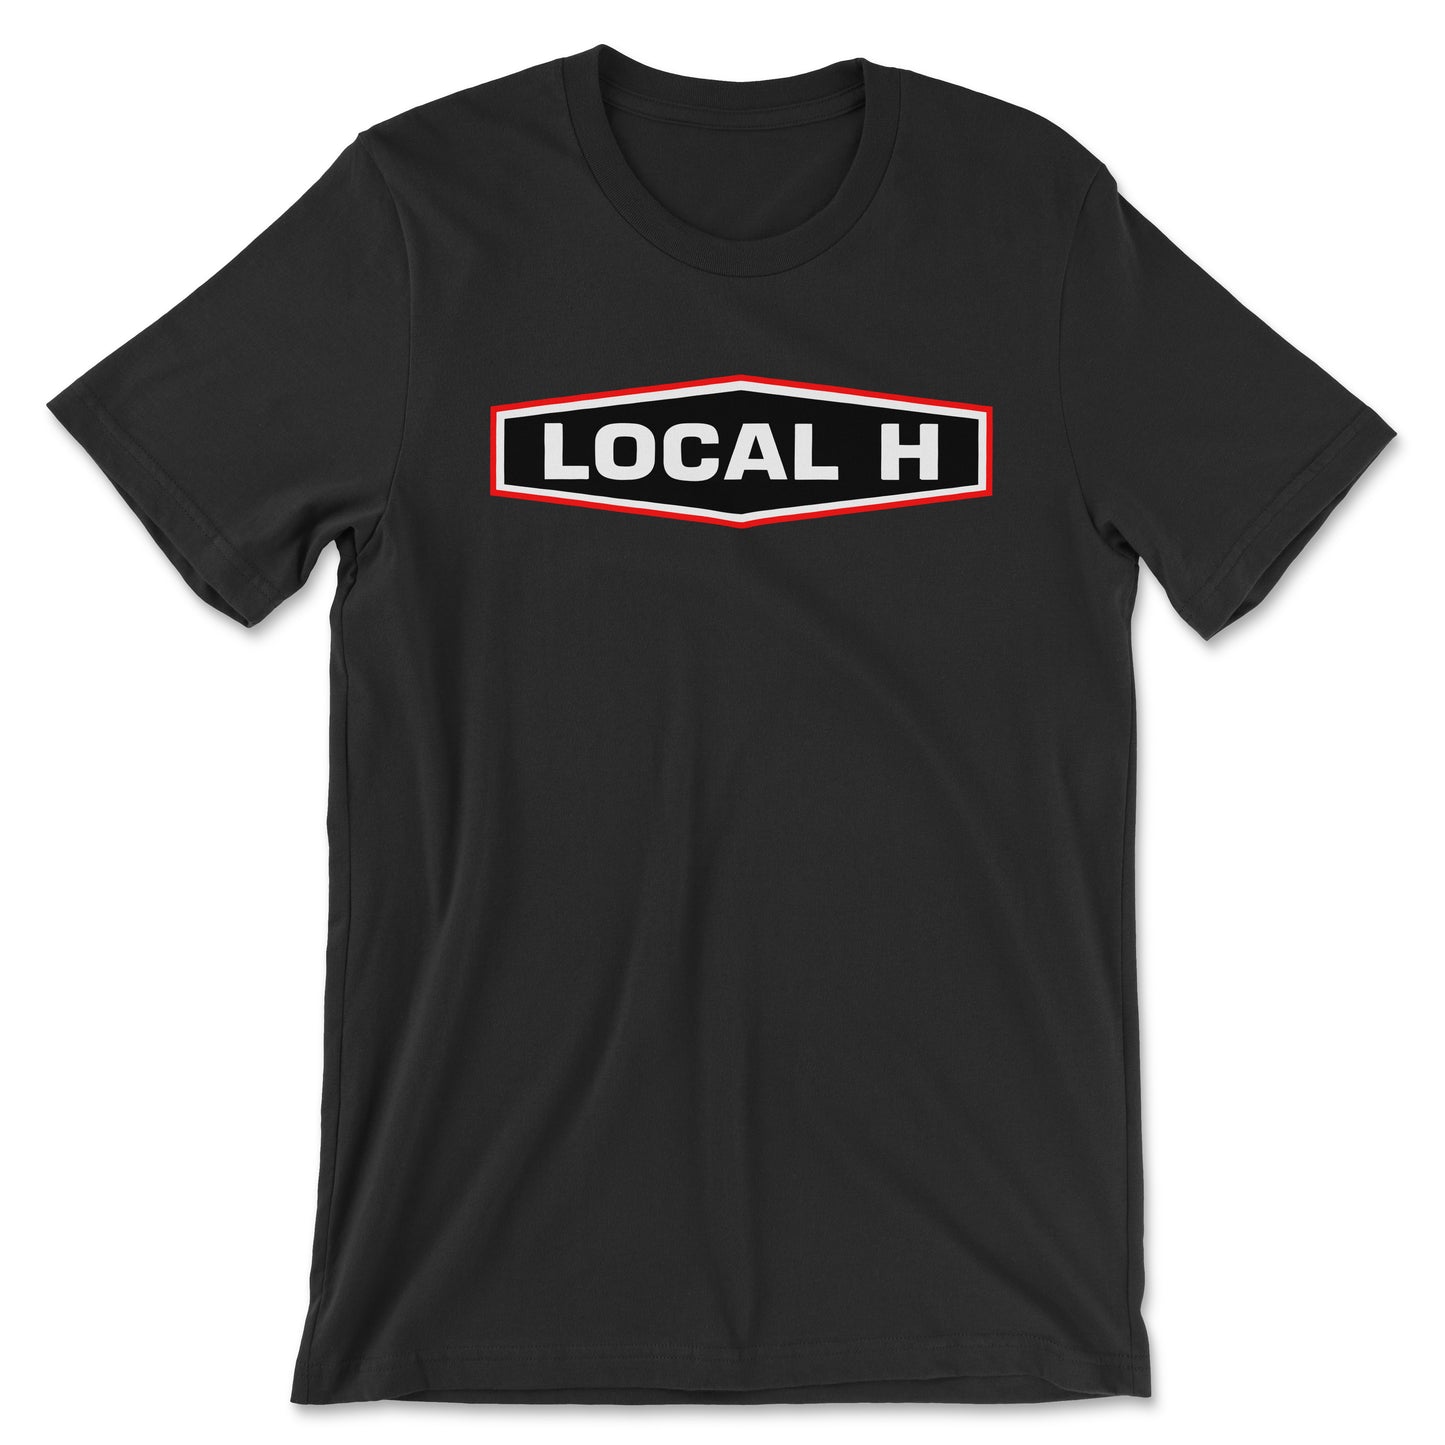 Local H - Tee Shirt - Back To Basics, Baby